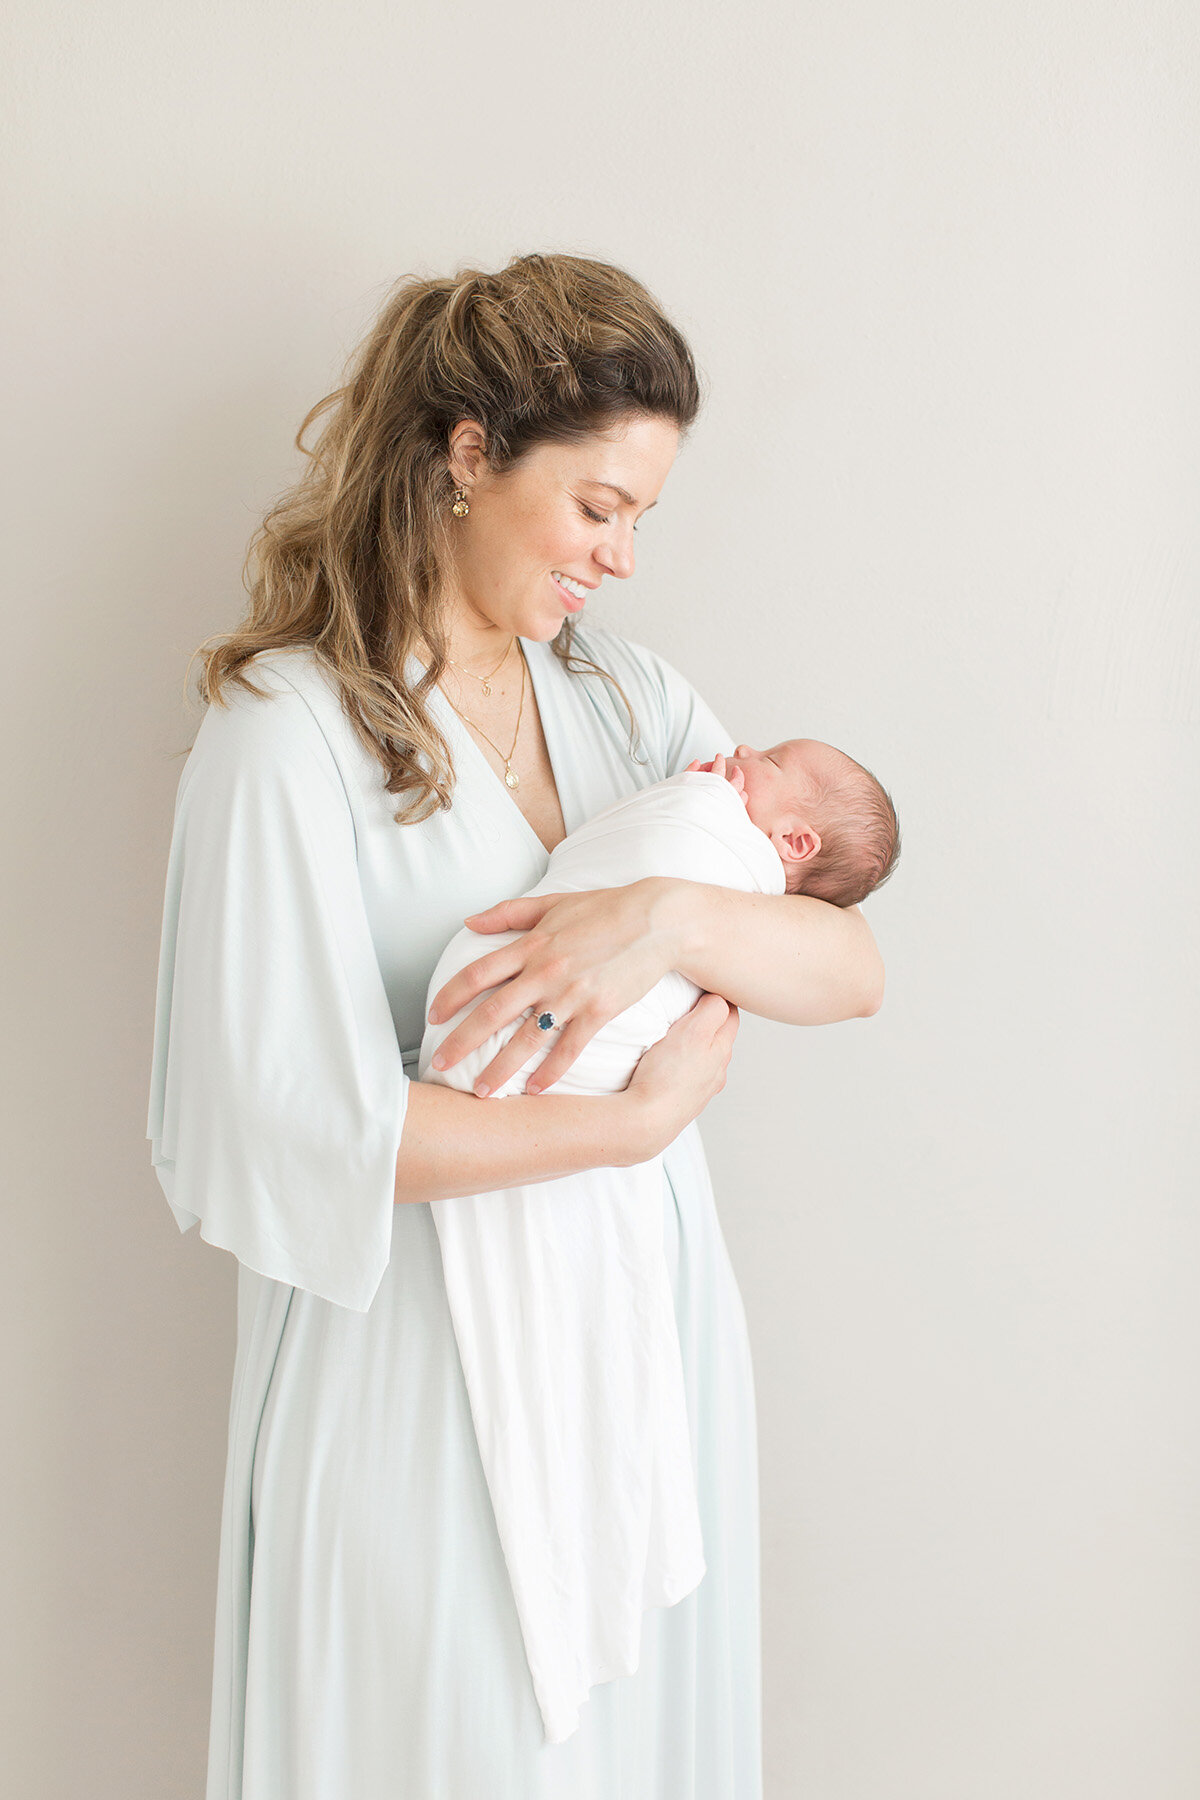 Julie Brock Photography | Louisville KY Newborn Photographer | Maternity Photographer | Family | Mom holding baby in perfect dress.jpg